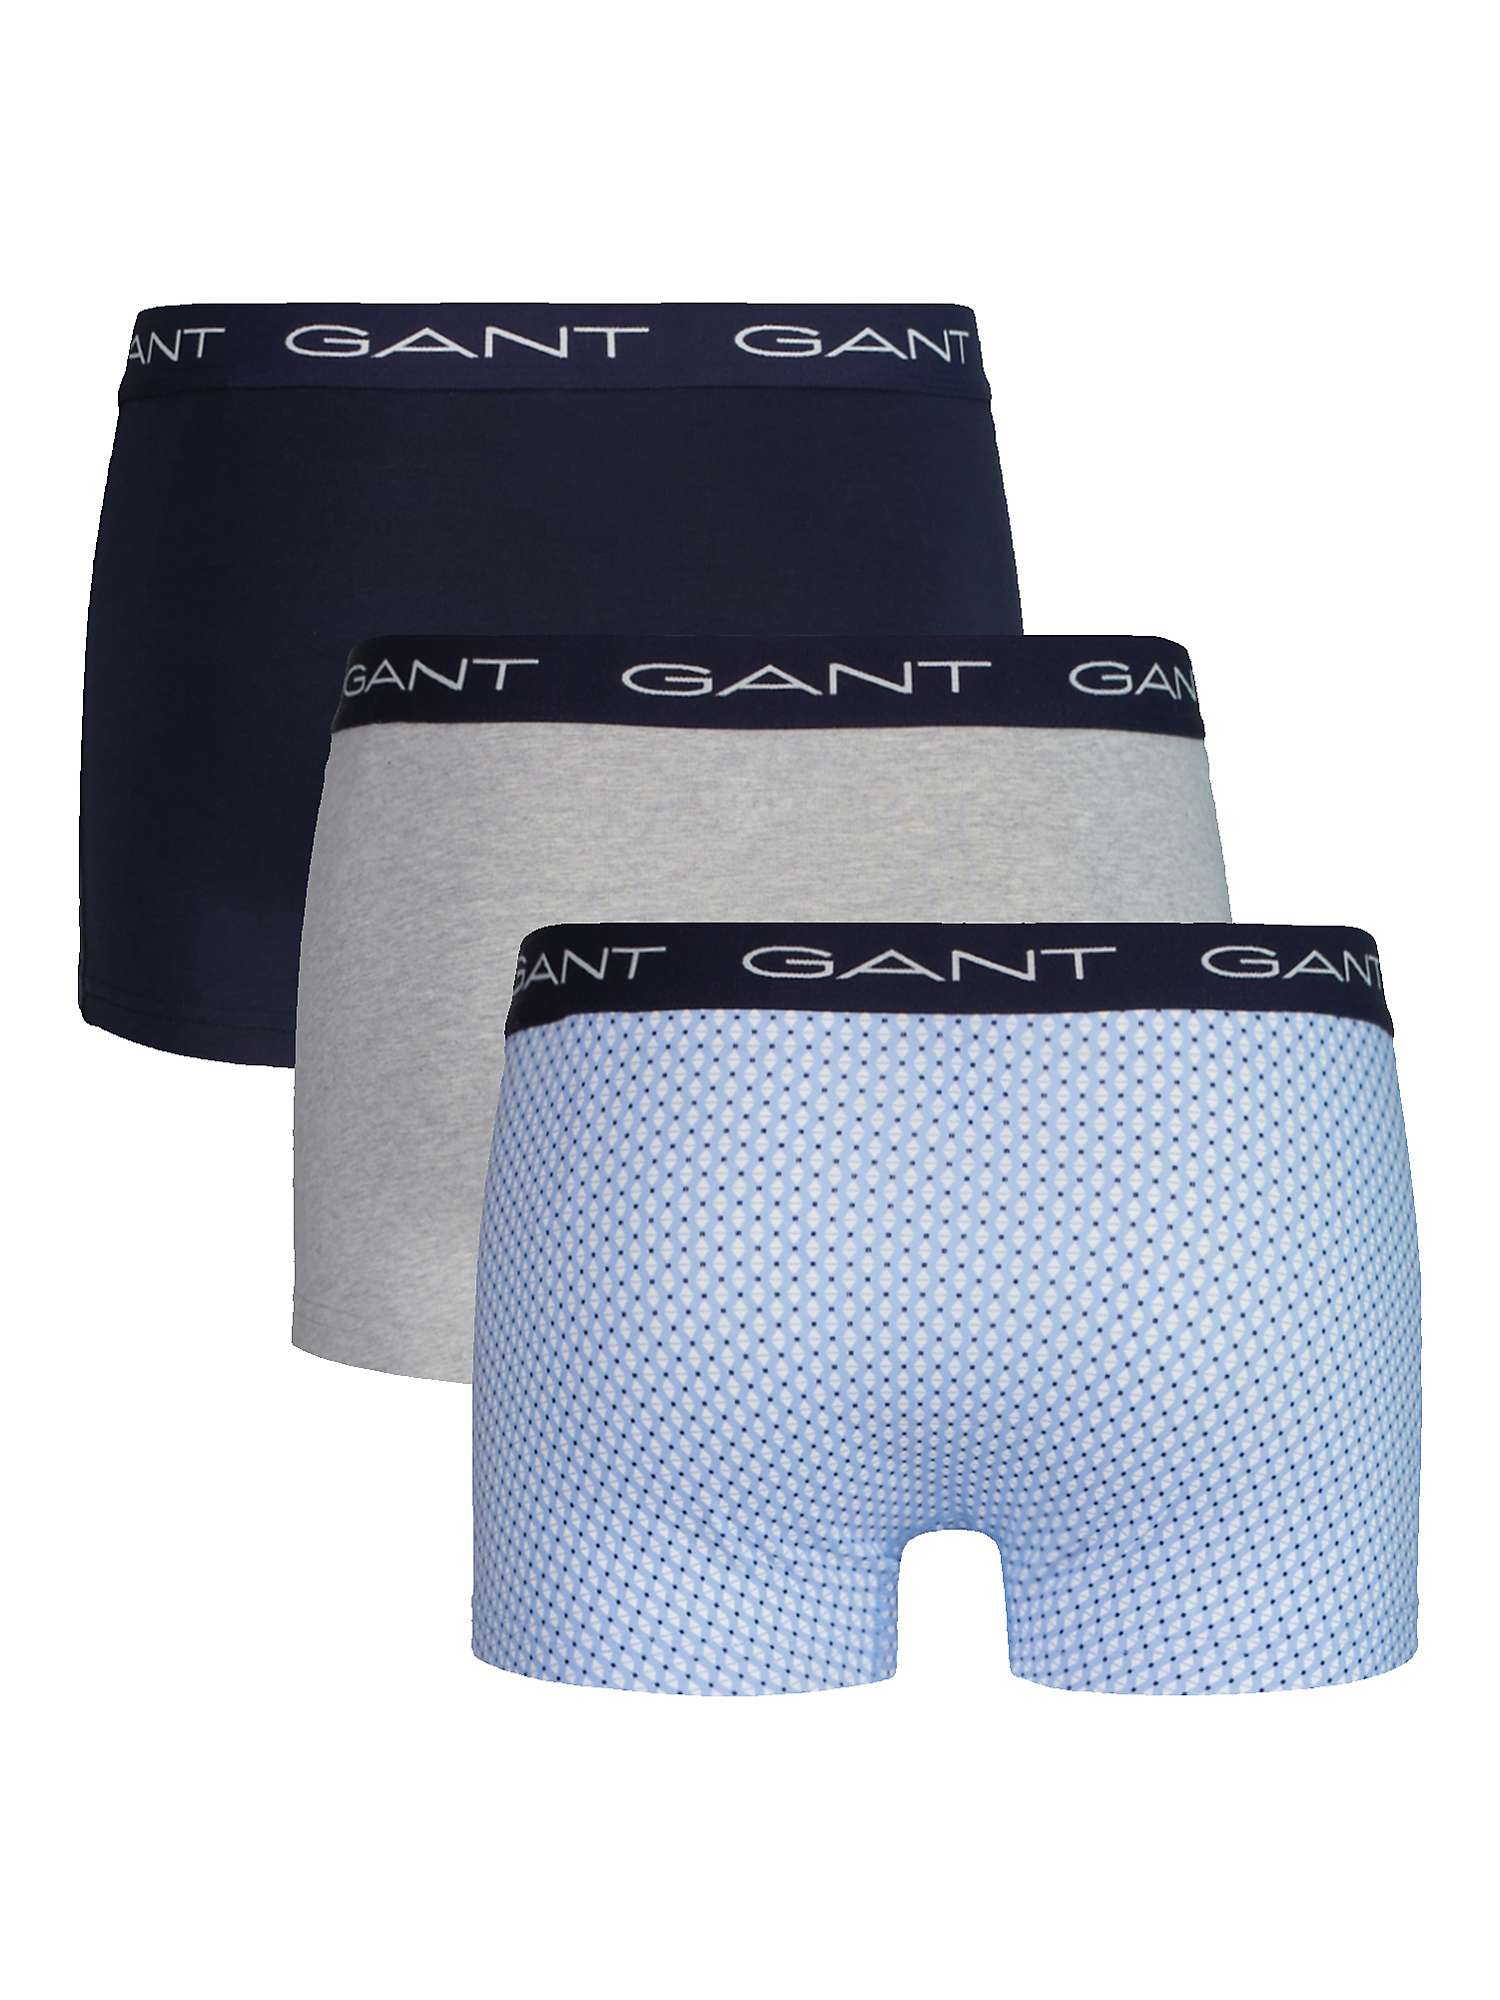 Buy GANT Micro Print Trunks, Pack of 3, Blue Online at johnlewis.com